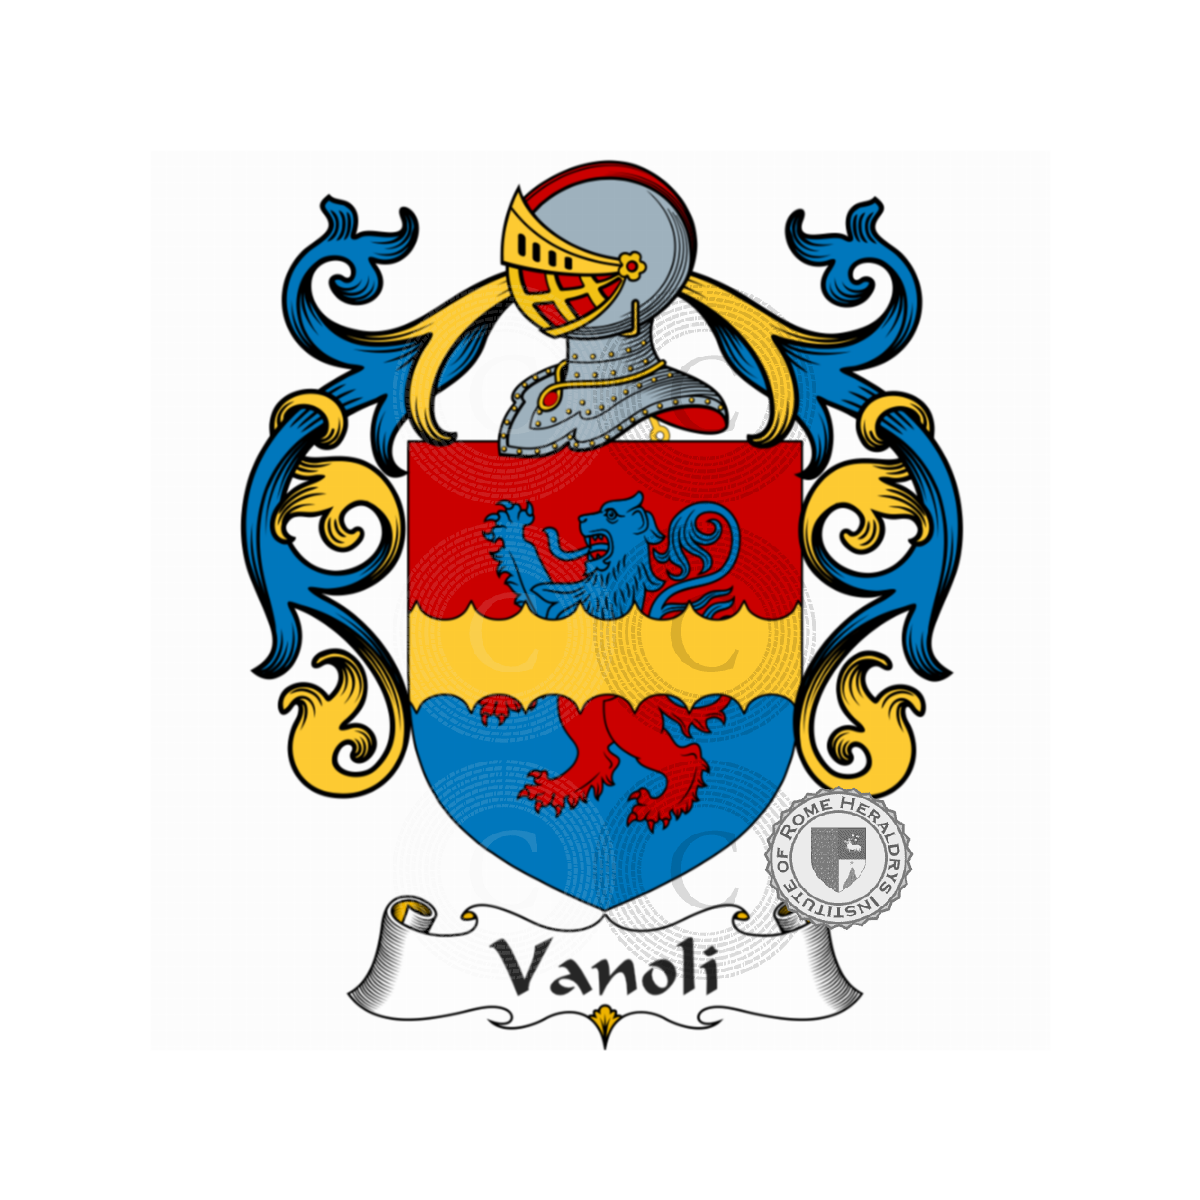 Brasão da famíliaVanoli, Vanoni,Vanonij